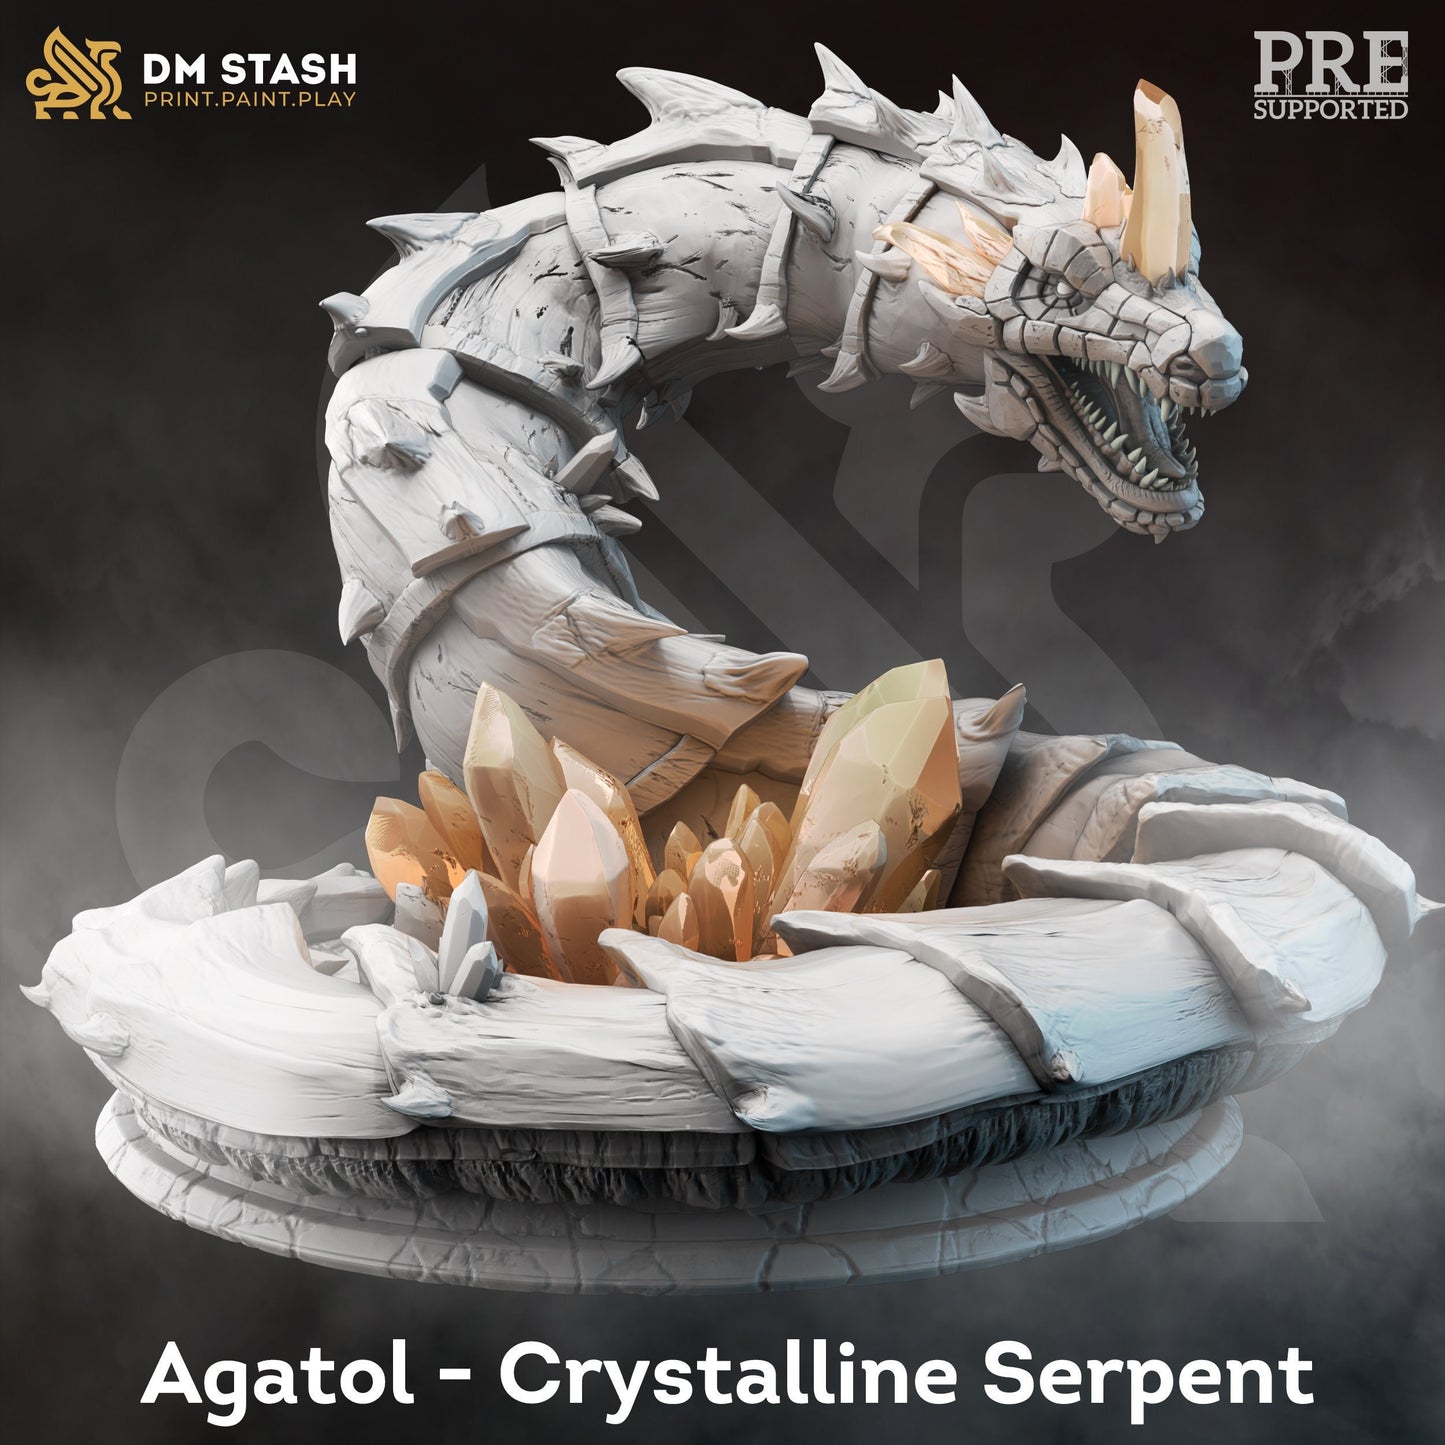 Agatol - Crystalline Serpent by DM Stash